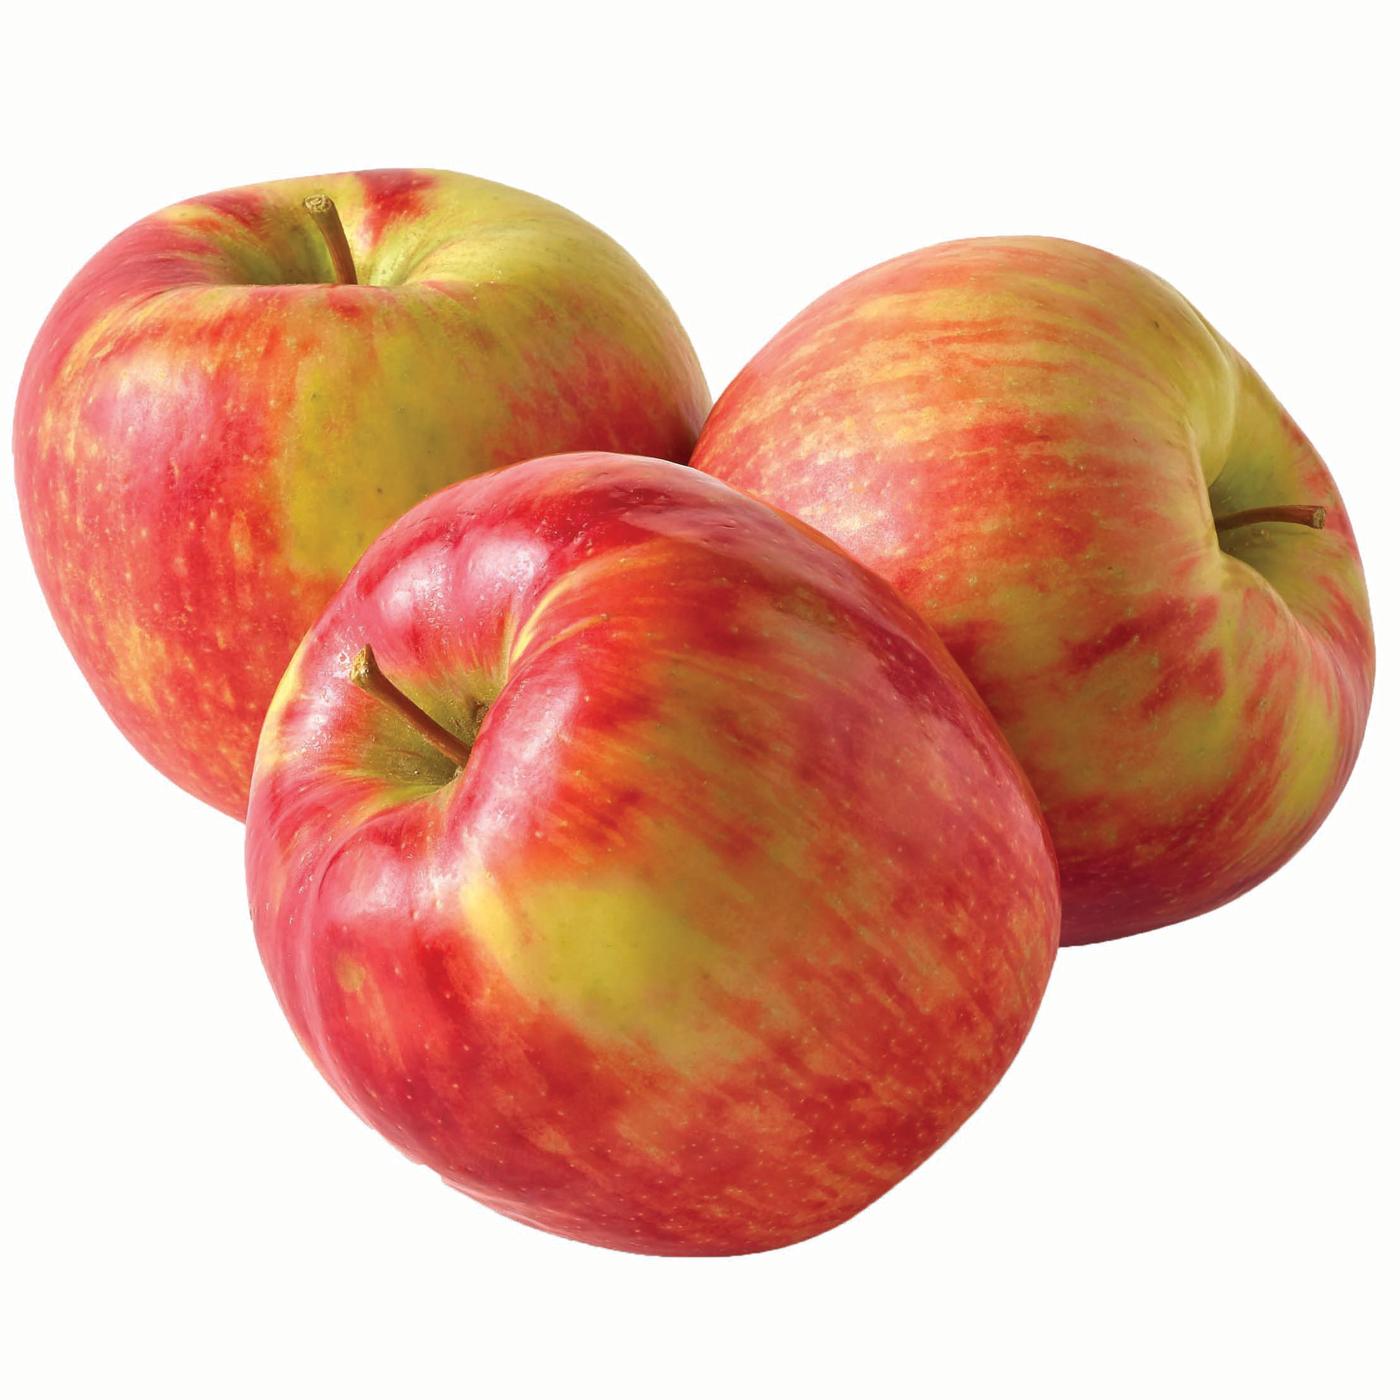 Organic apple: fruity-fresh pleasant aroma